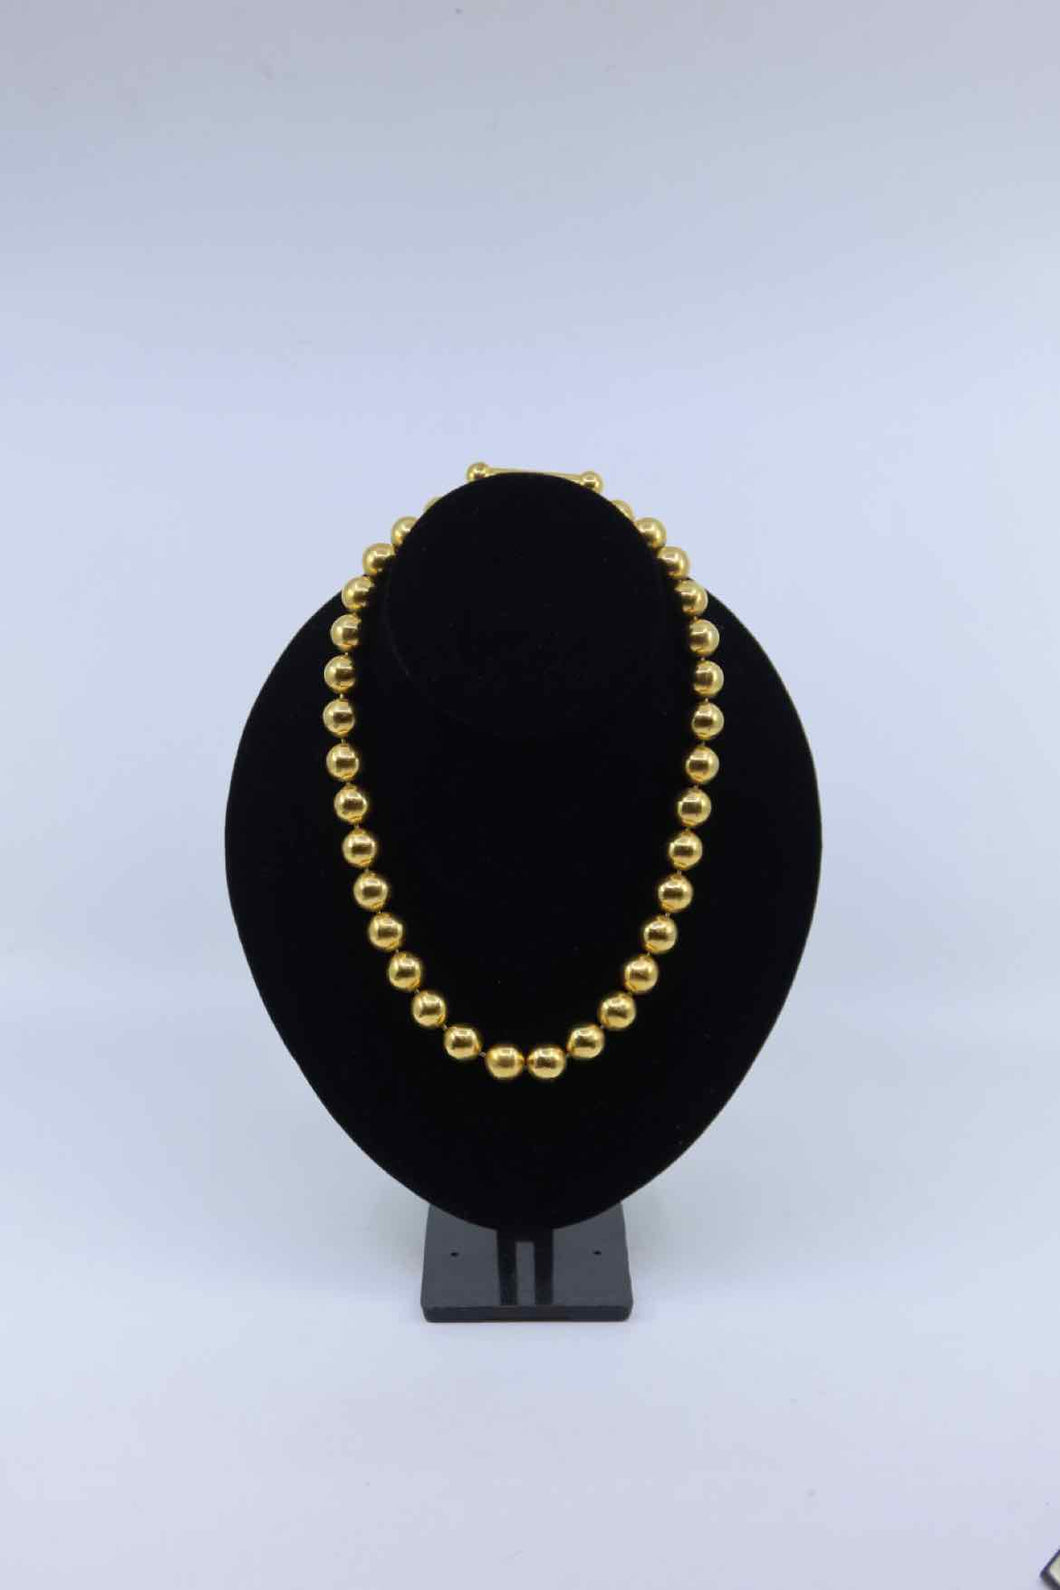 VAUBEL Gold Necklace